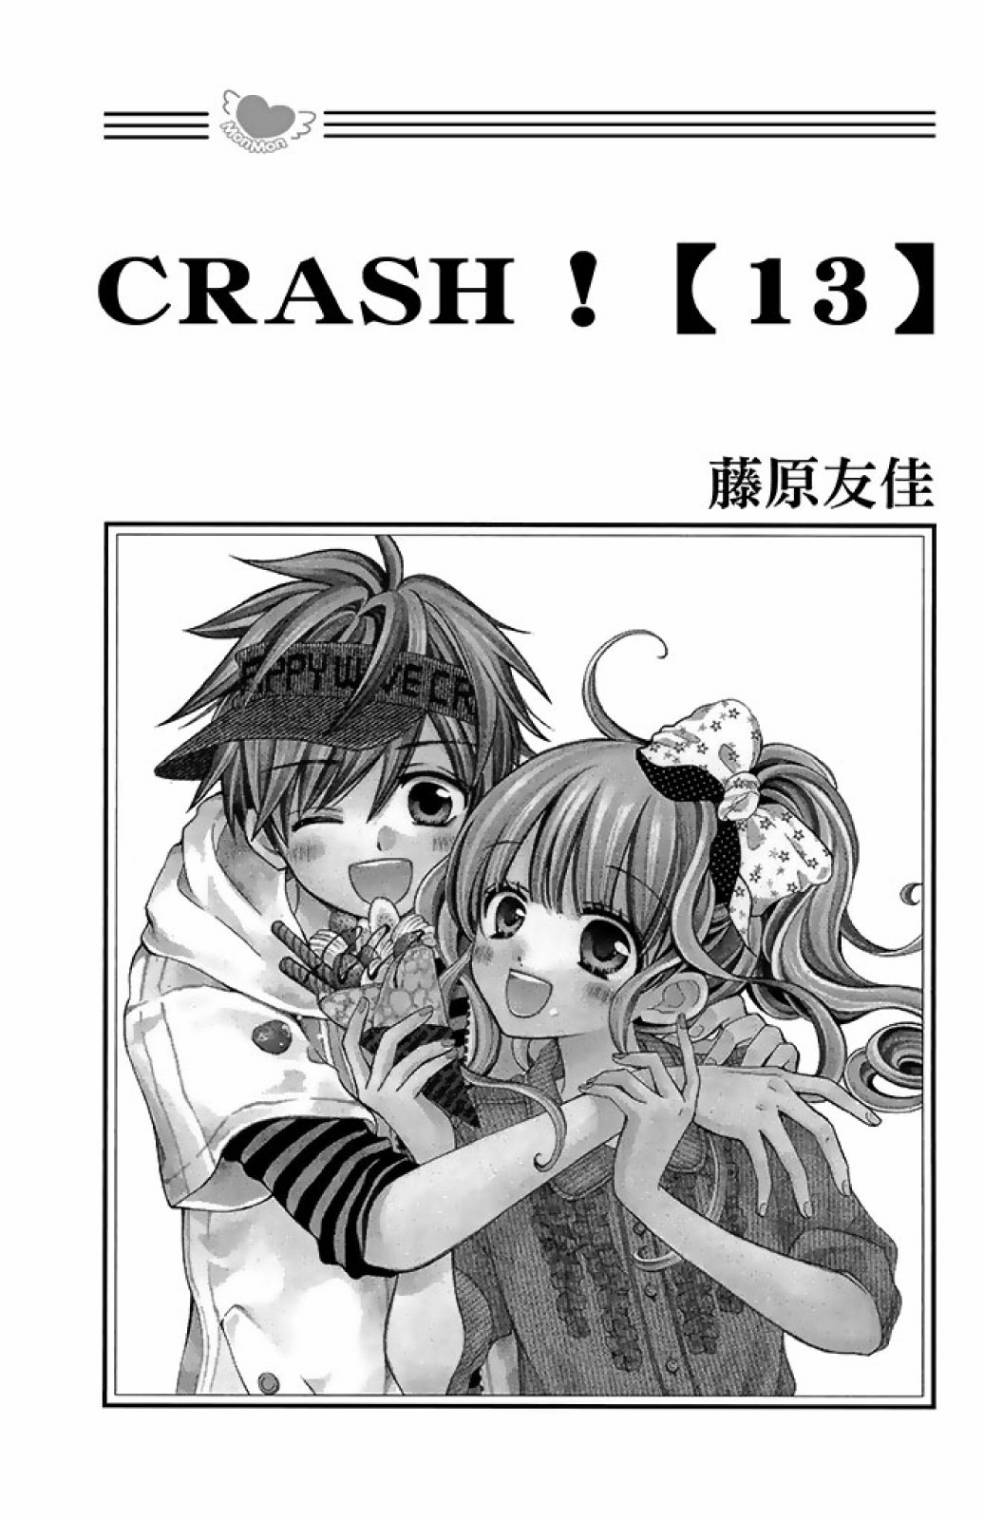 Crash!第二部 - 第13卷(1/4) - 3